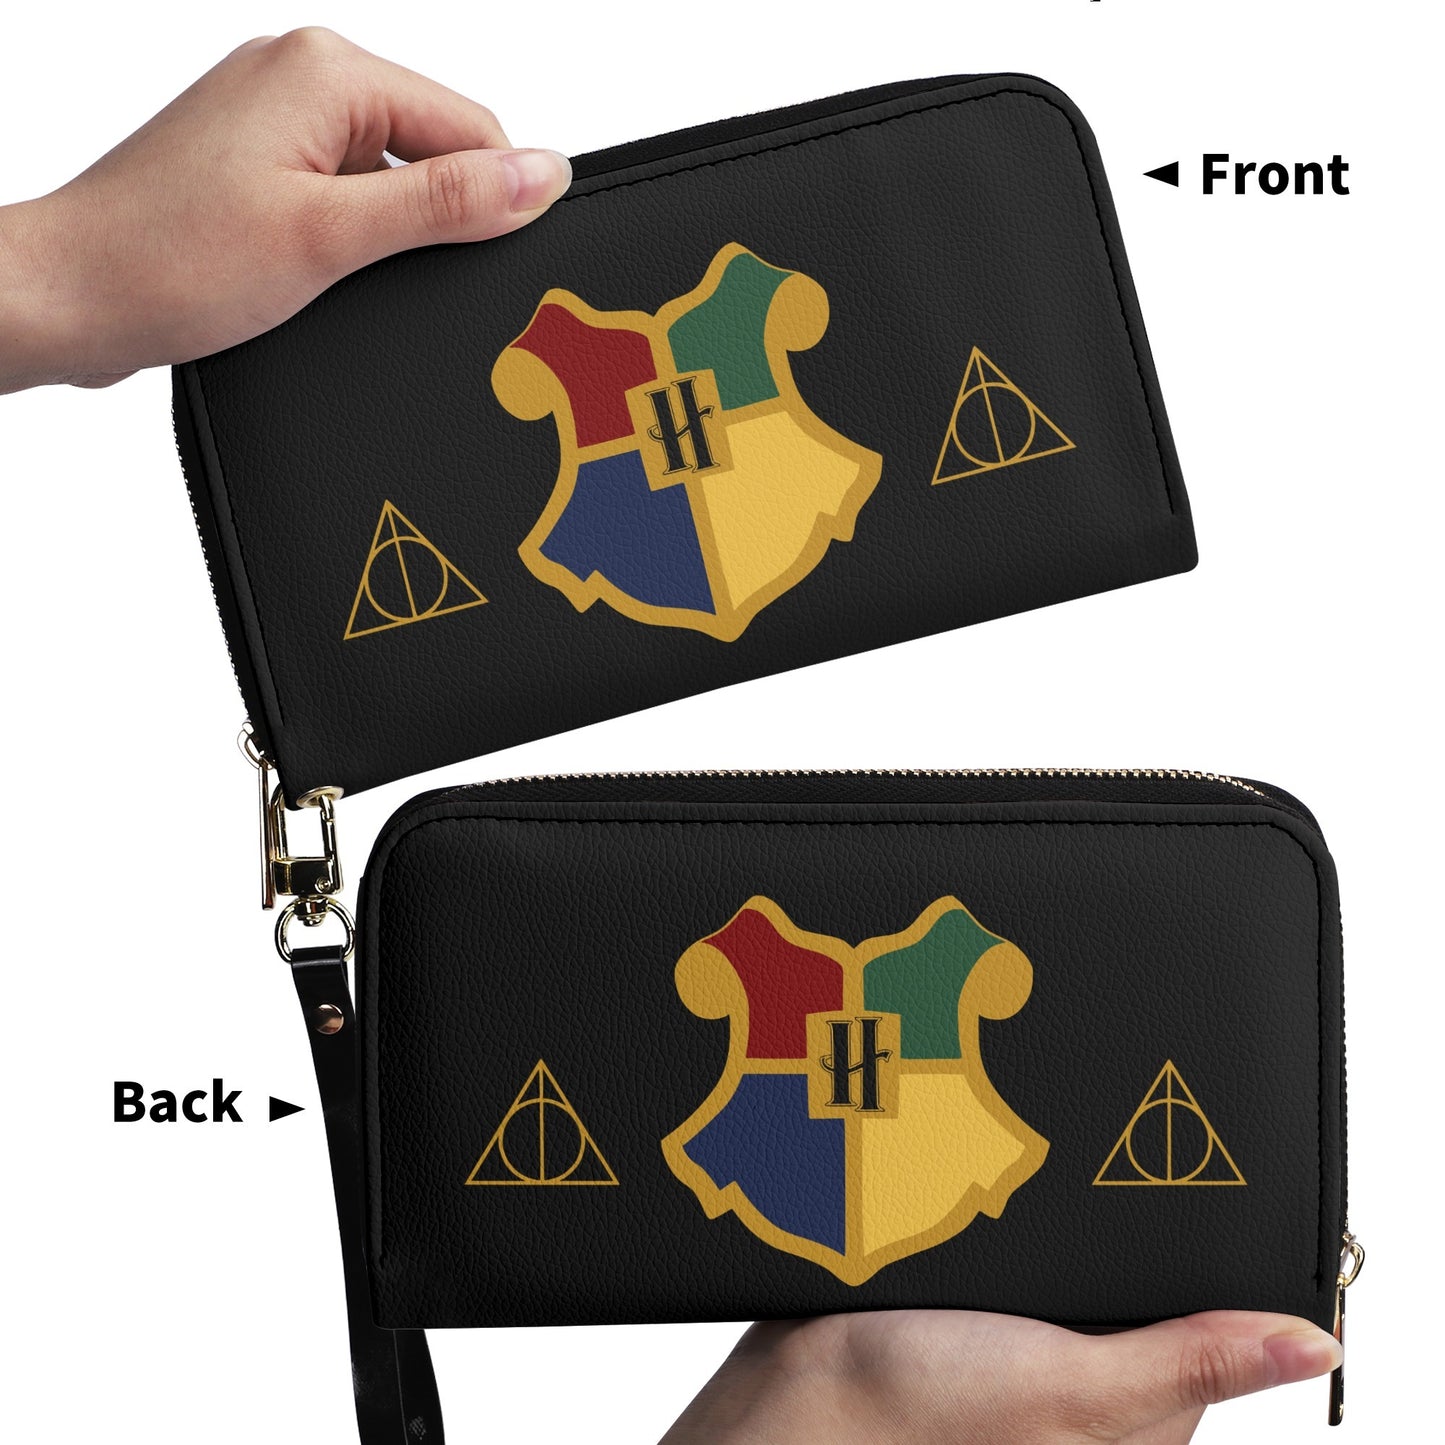 Hogwarts Alumini Leather Bag